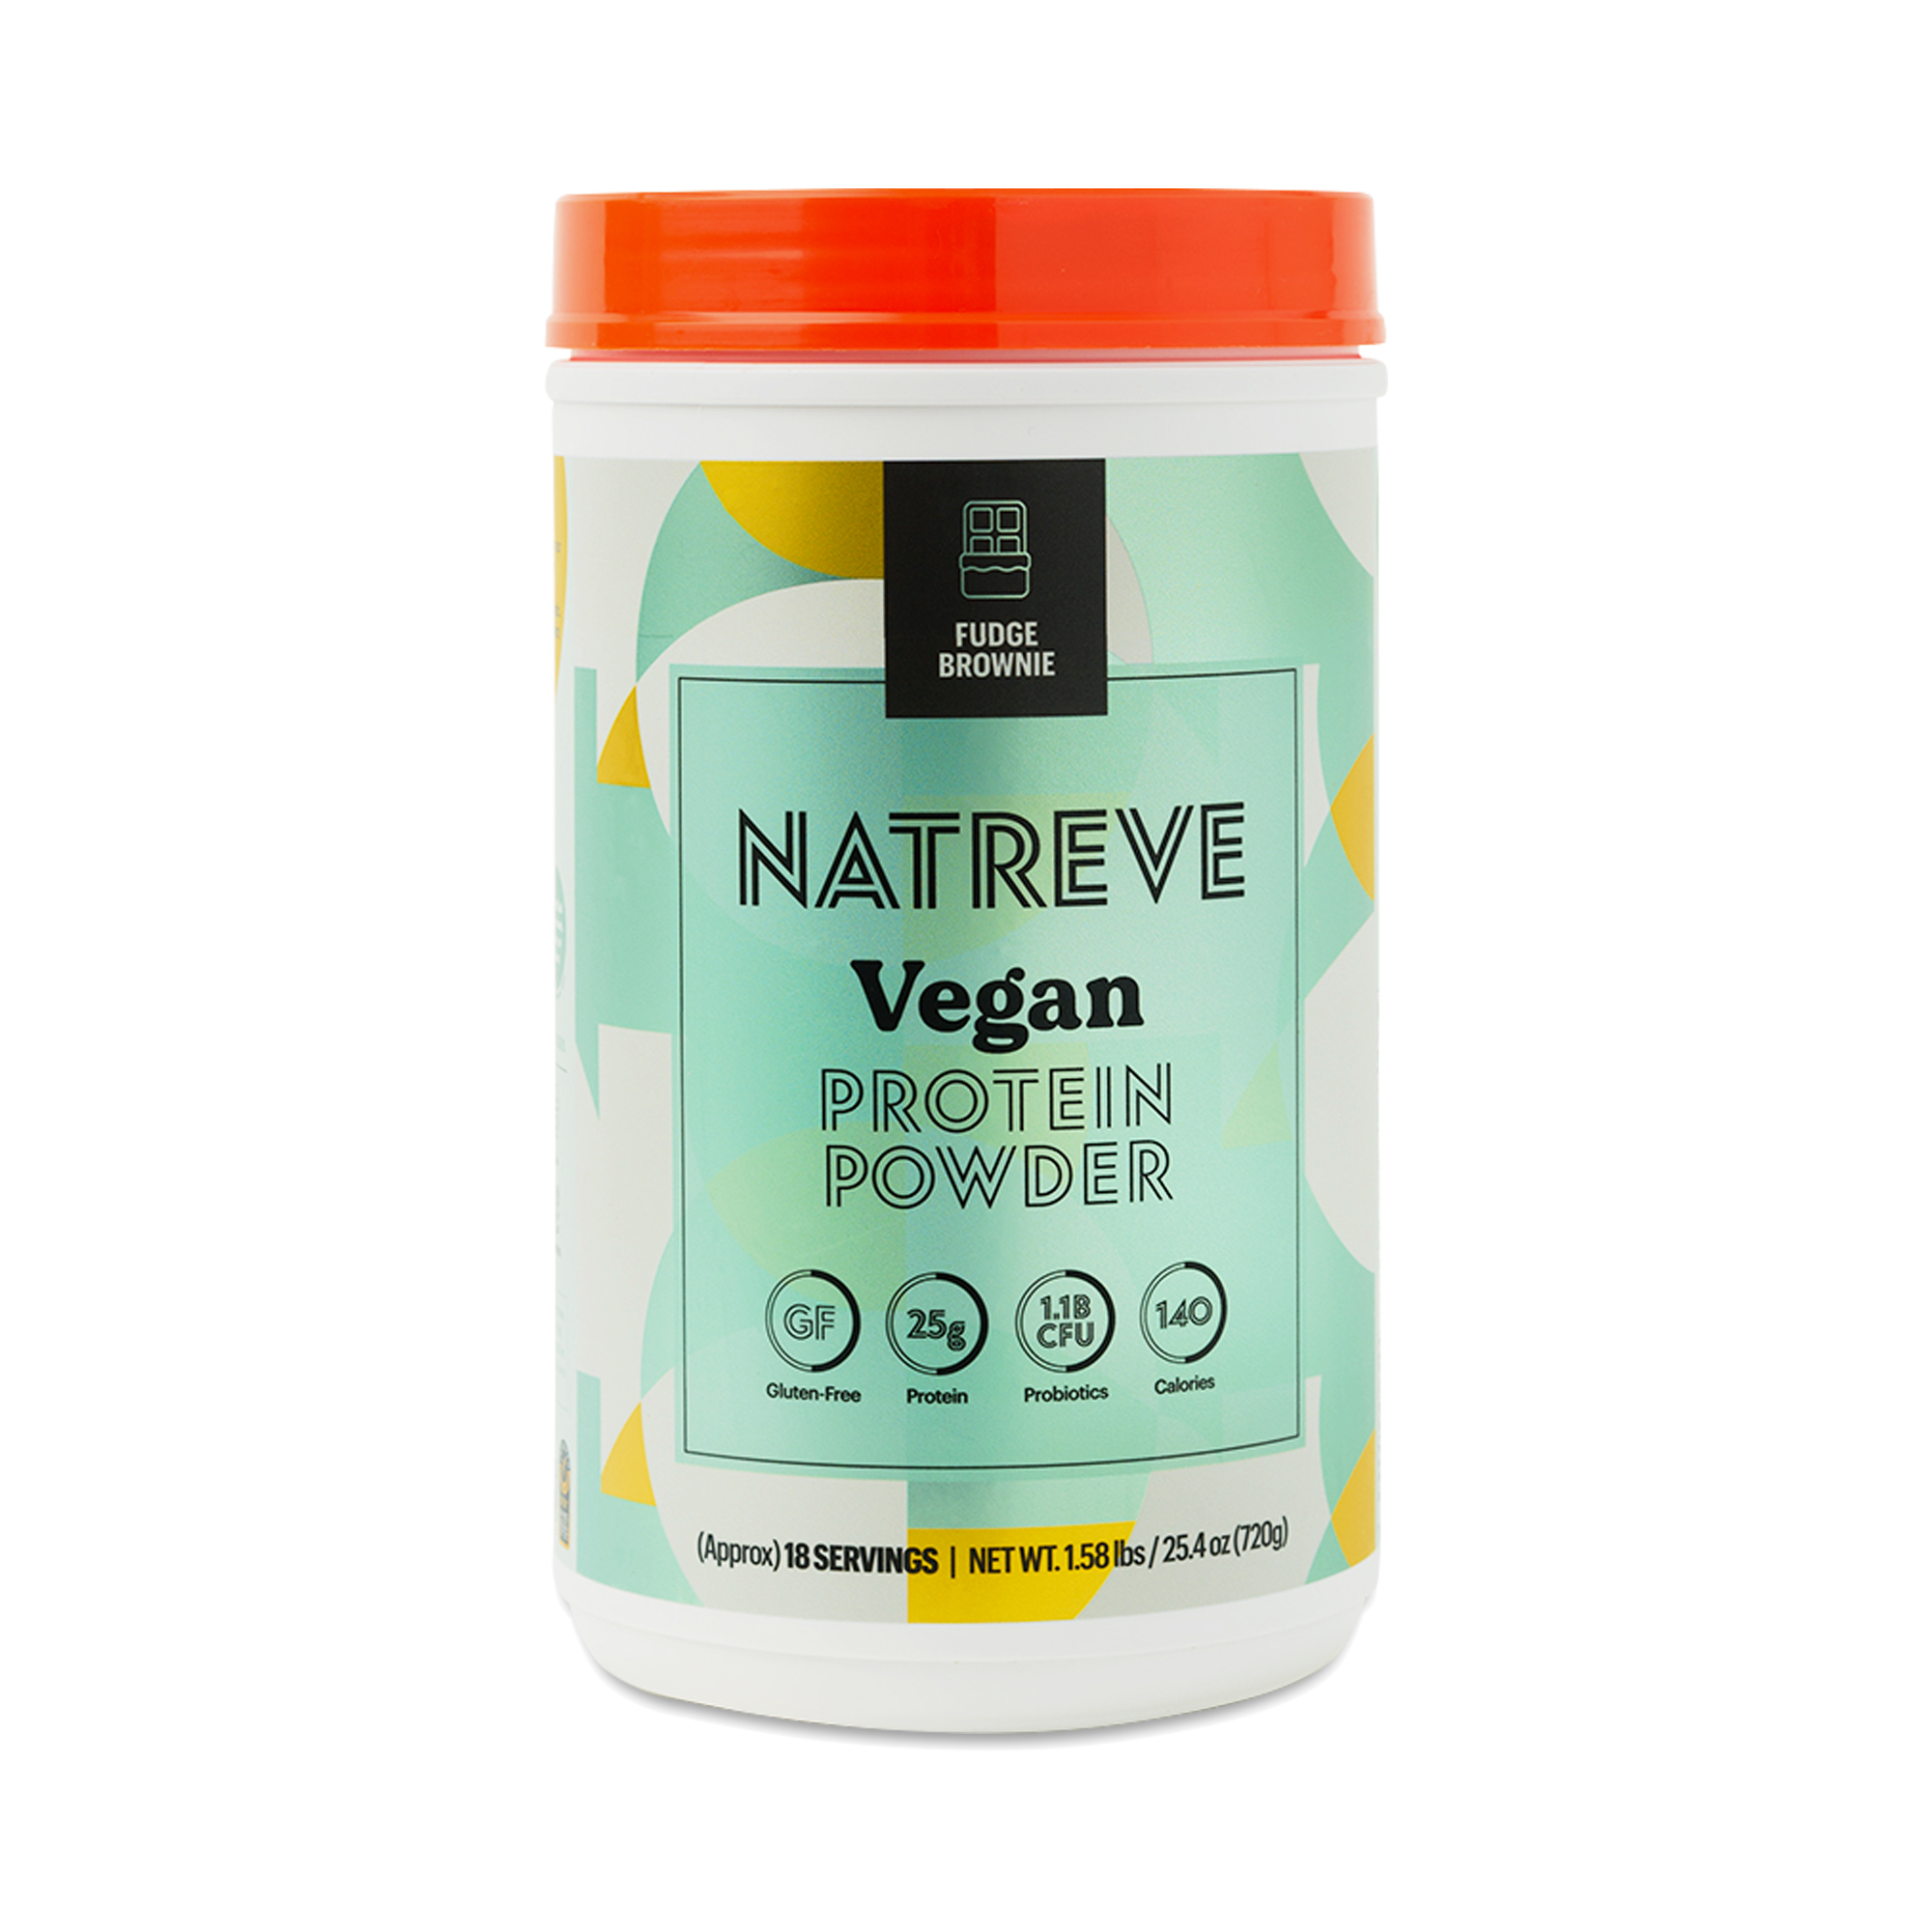 Natreve Vegan Fudge Brownie Protein Powder 23.8 oz tub